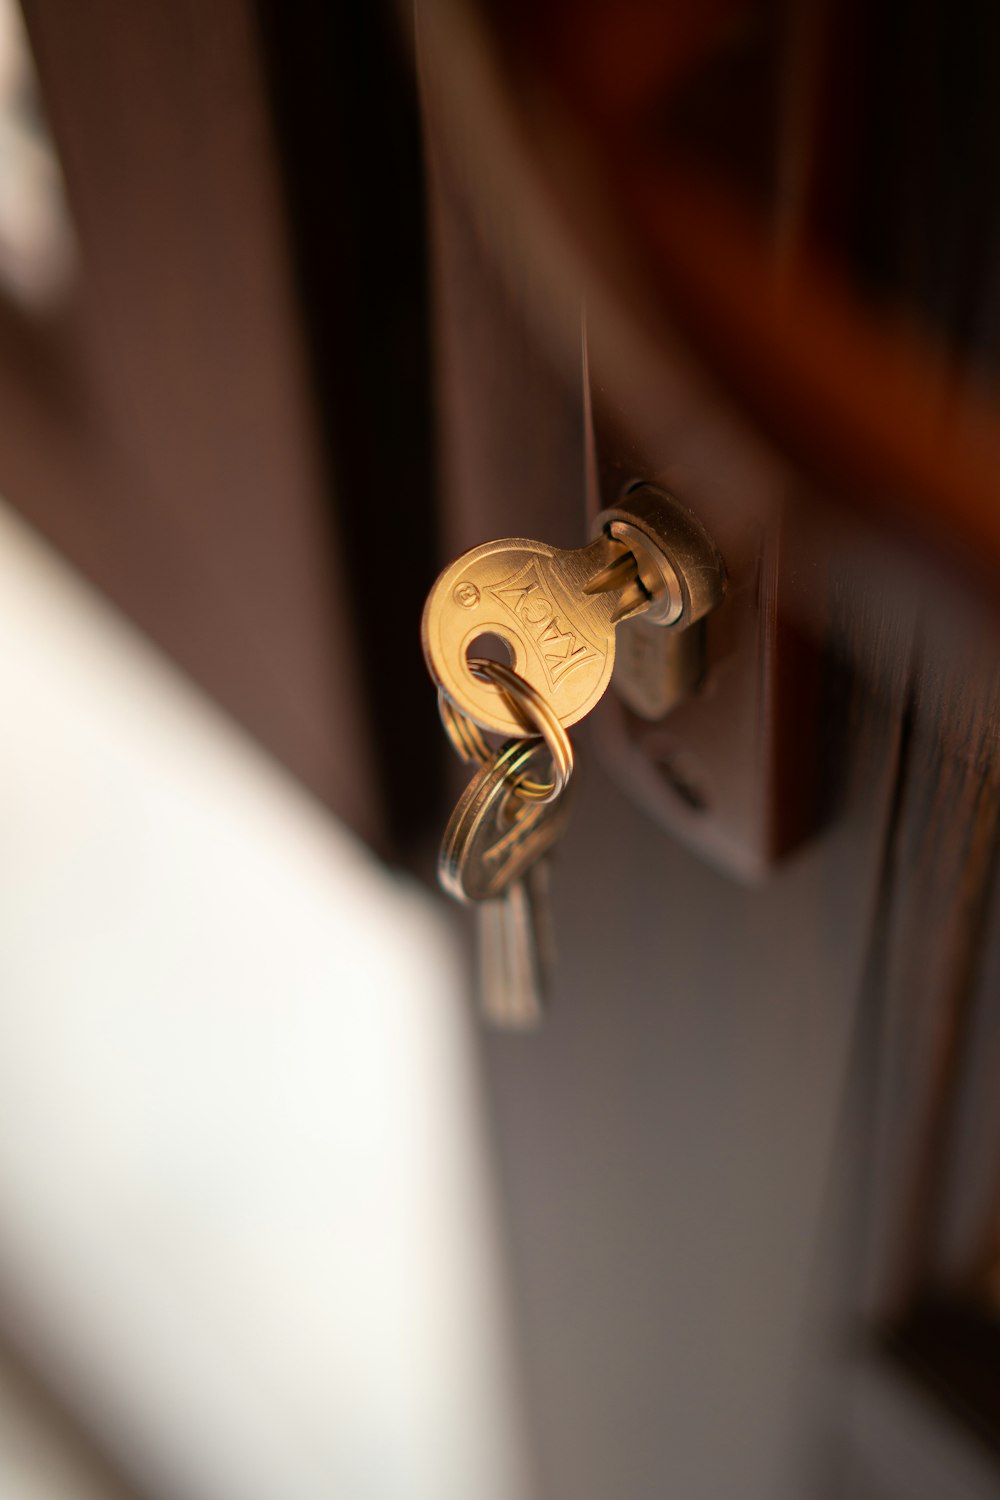 a close up of a key on a door